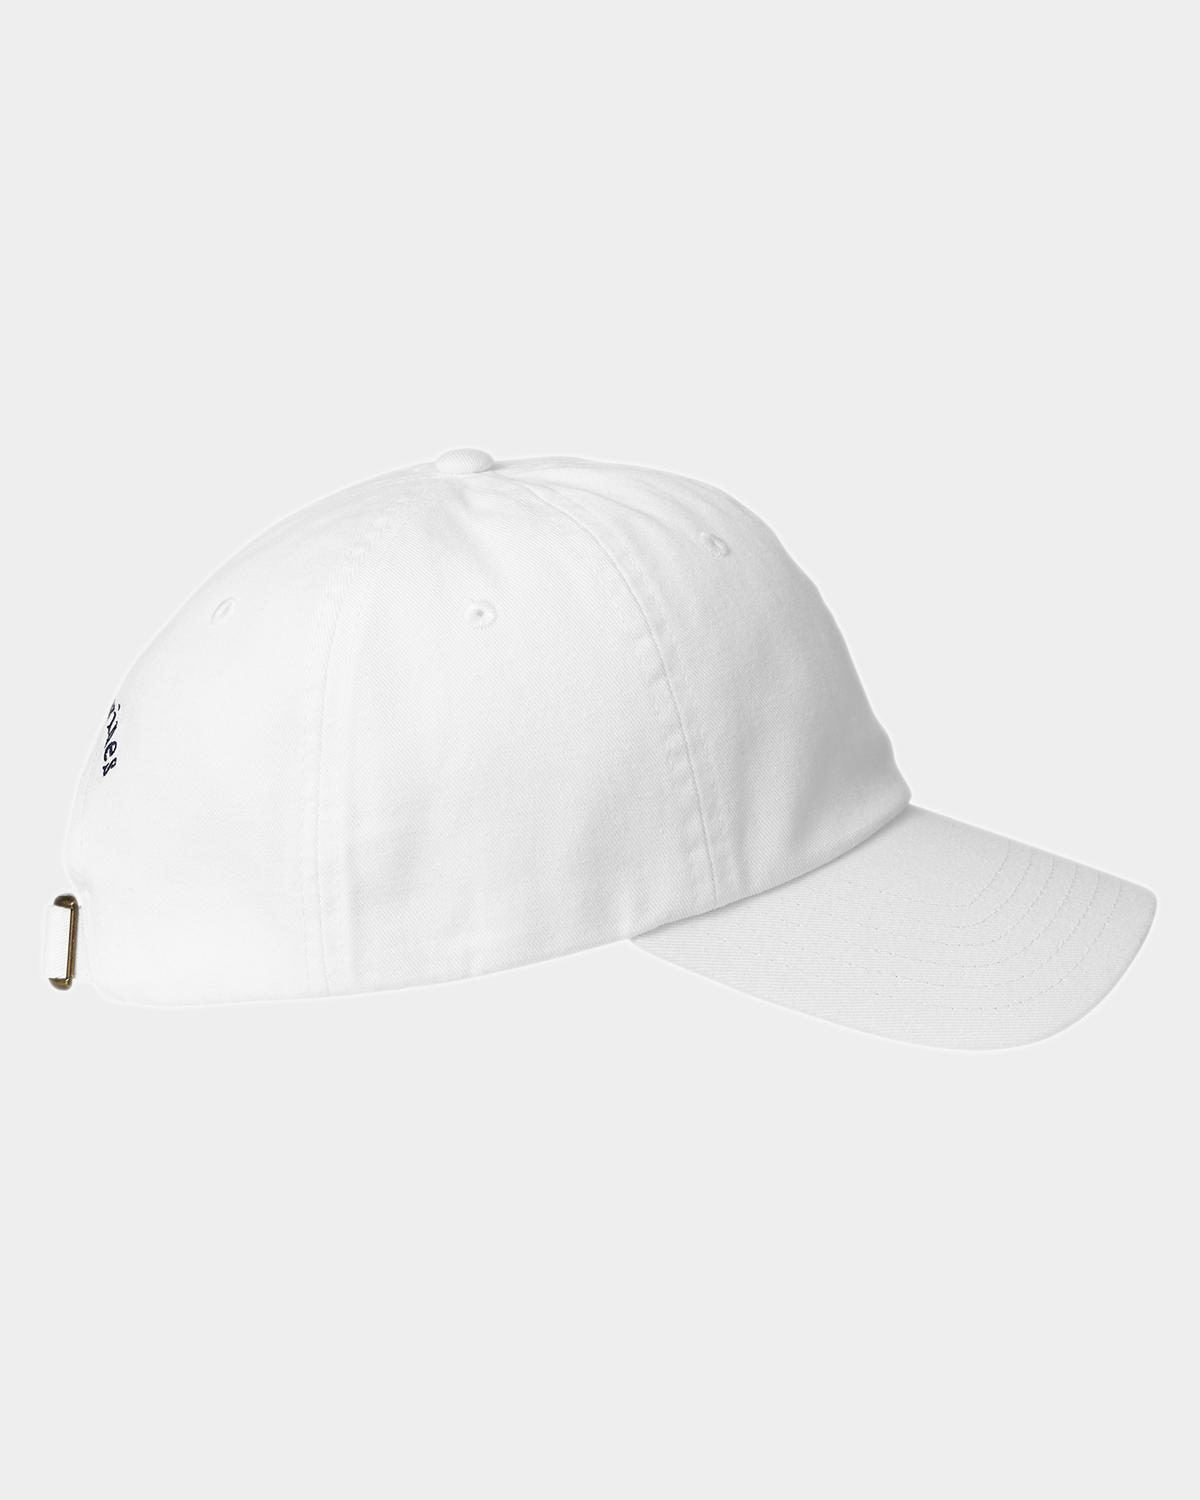 Vineyard Vines Custom Baseball Hats, White Cap